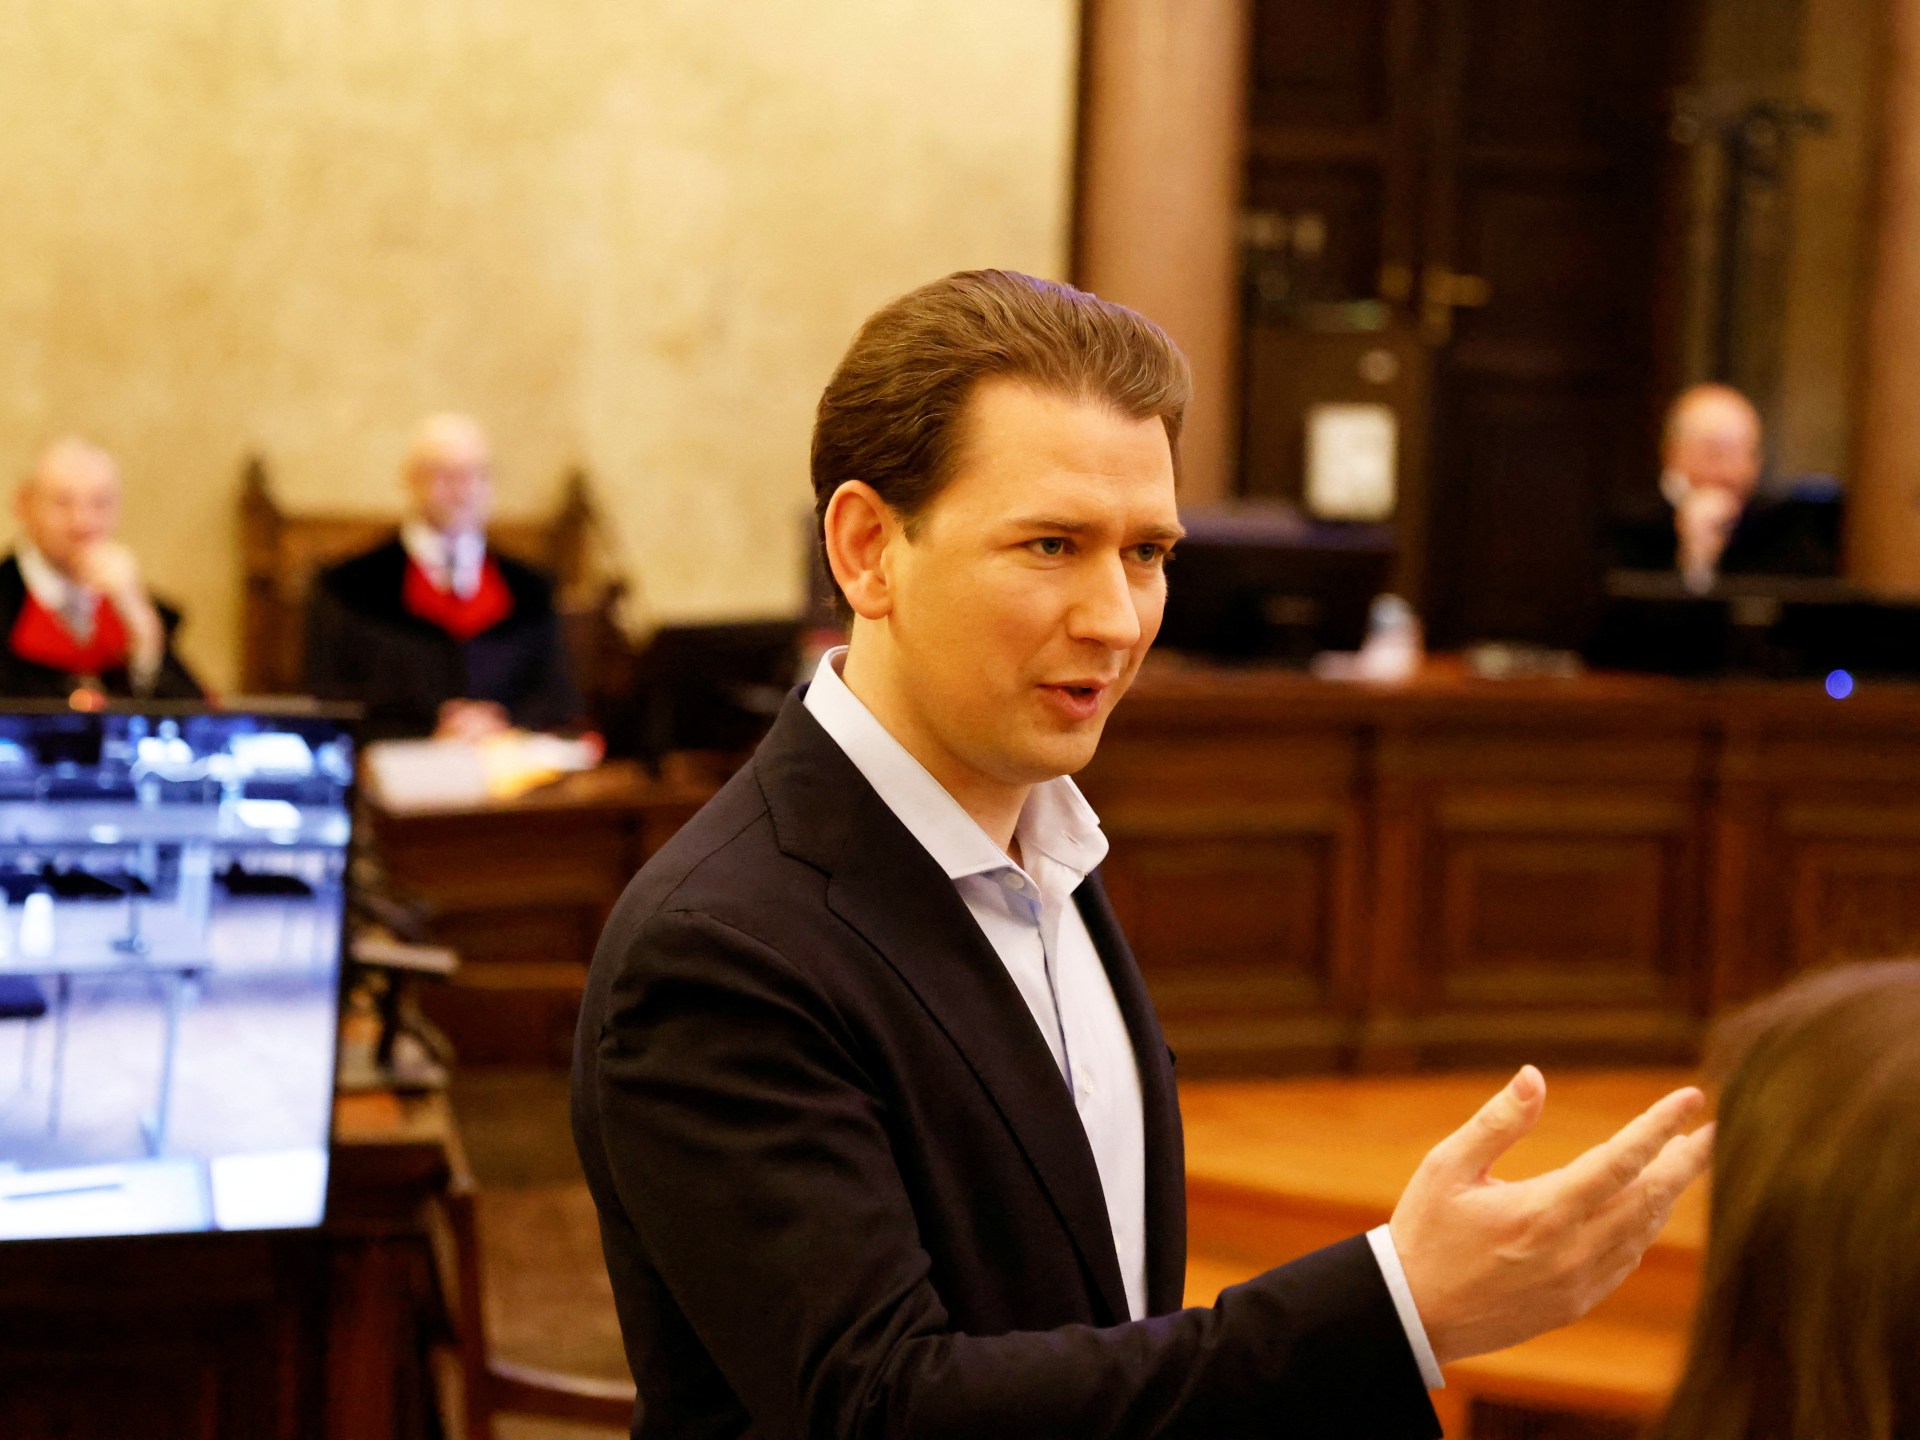 Former Austrian Chancellor Sebastian Kurz found guilty of perjury | Courts News